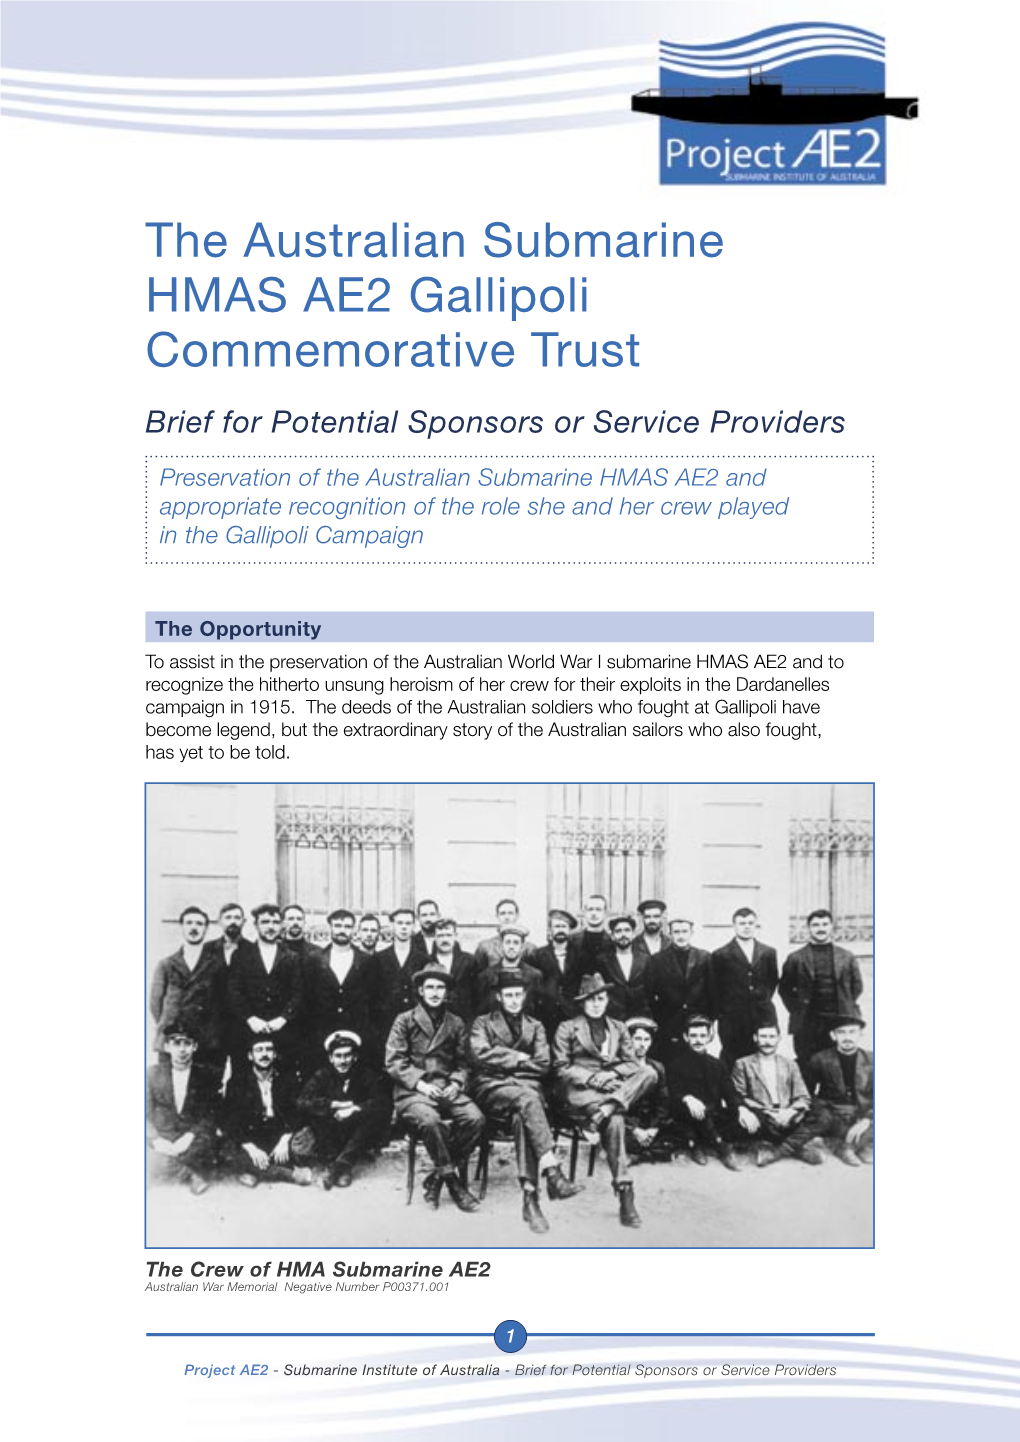 The Australian Submarine HMAS AE2 Gallipoli Commemorative Trust